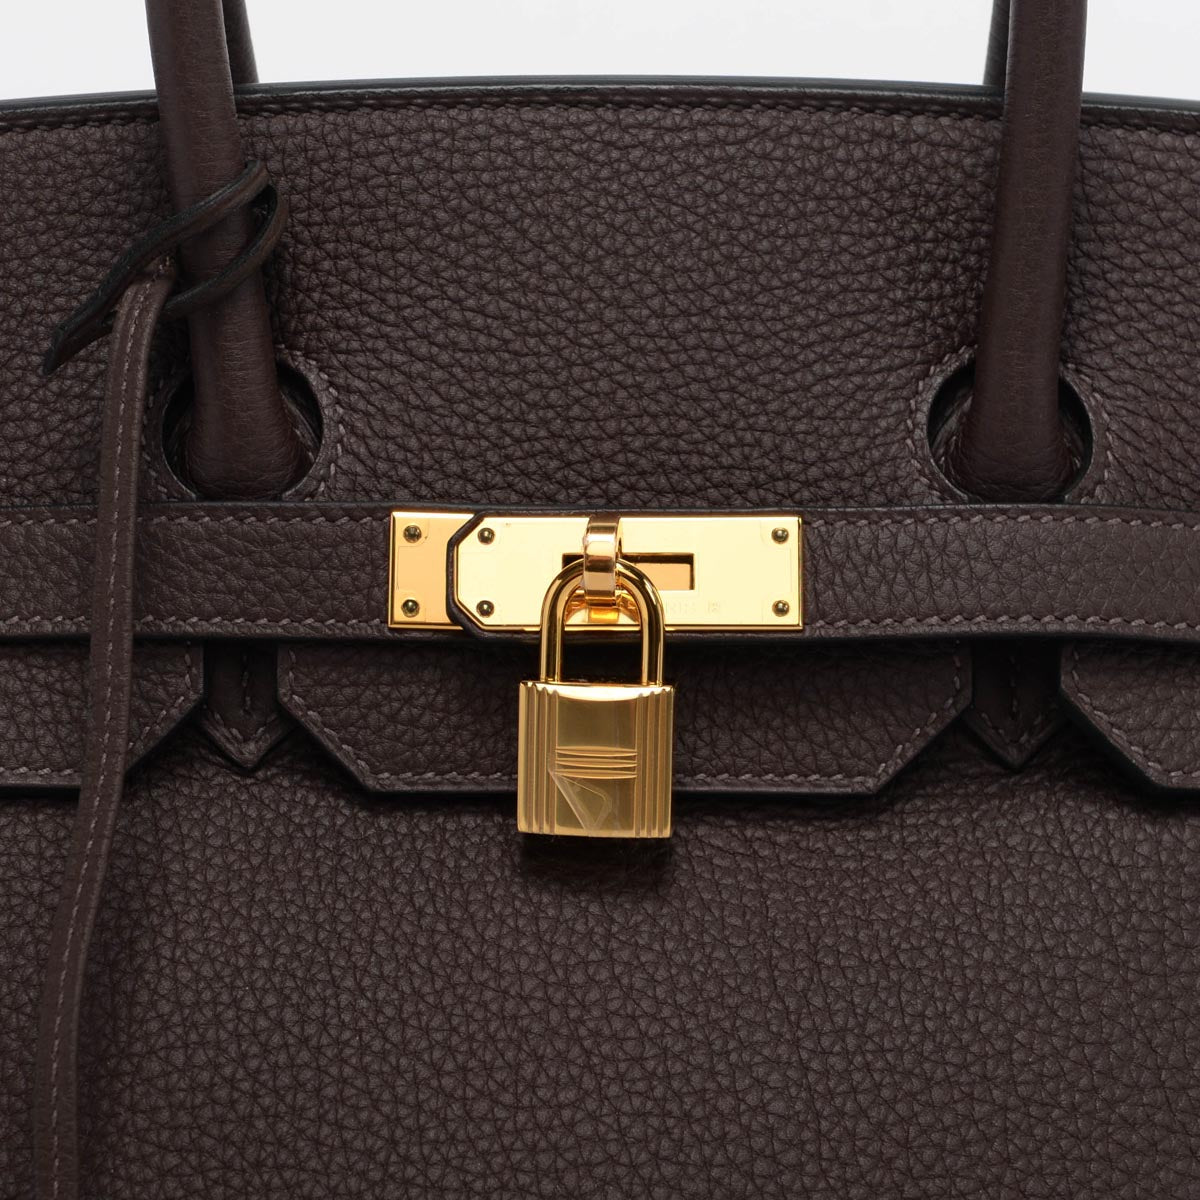 Hermès Birkin Togo Cacao GHW 35  Hermes birkin handbags, Hermes